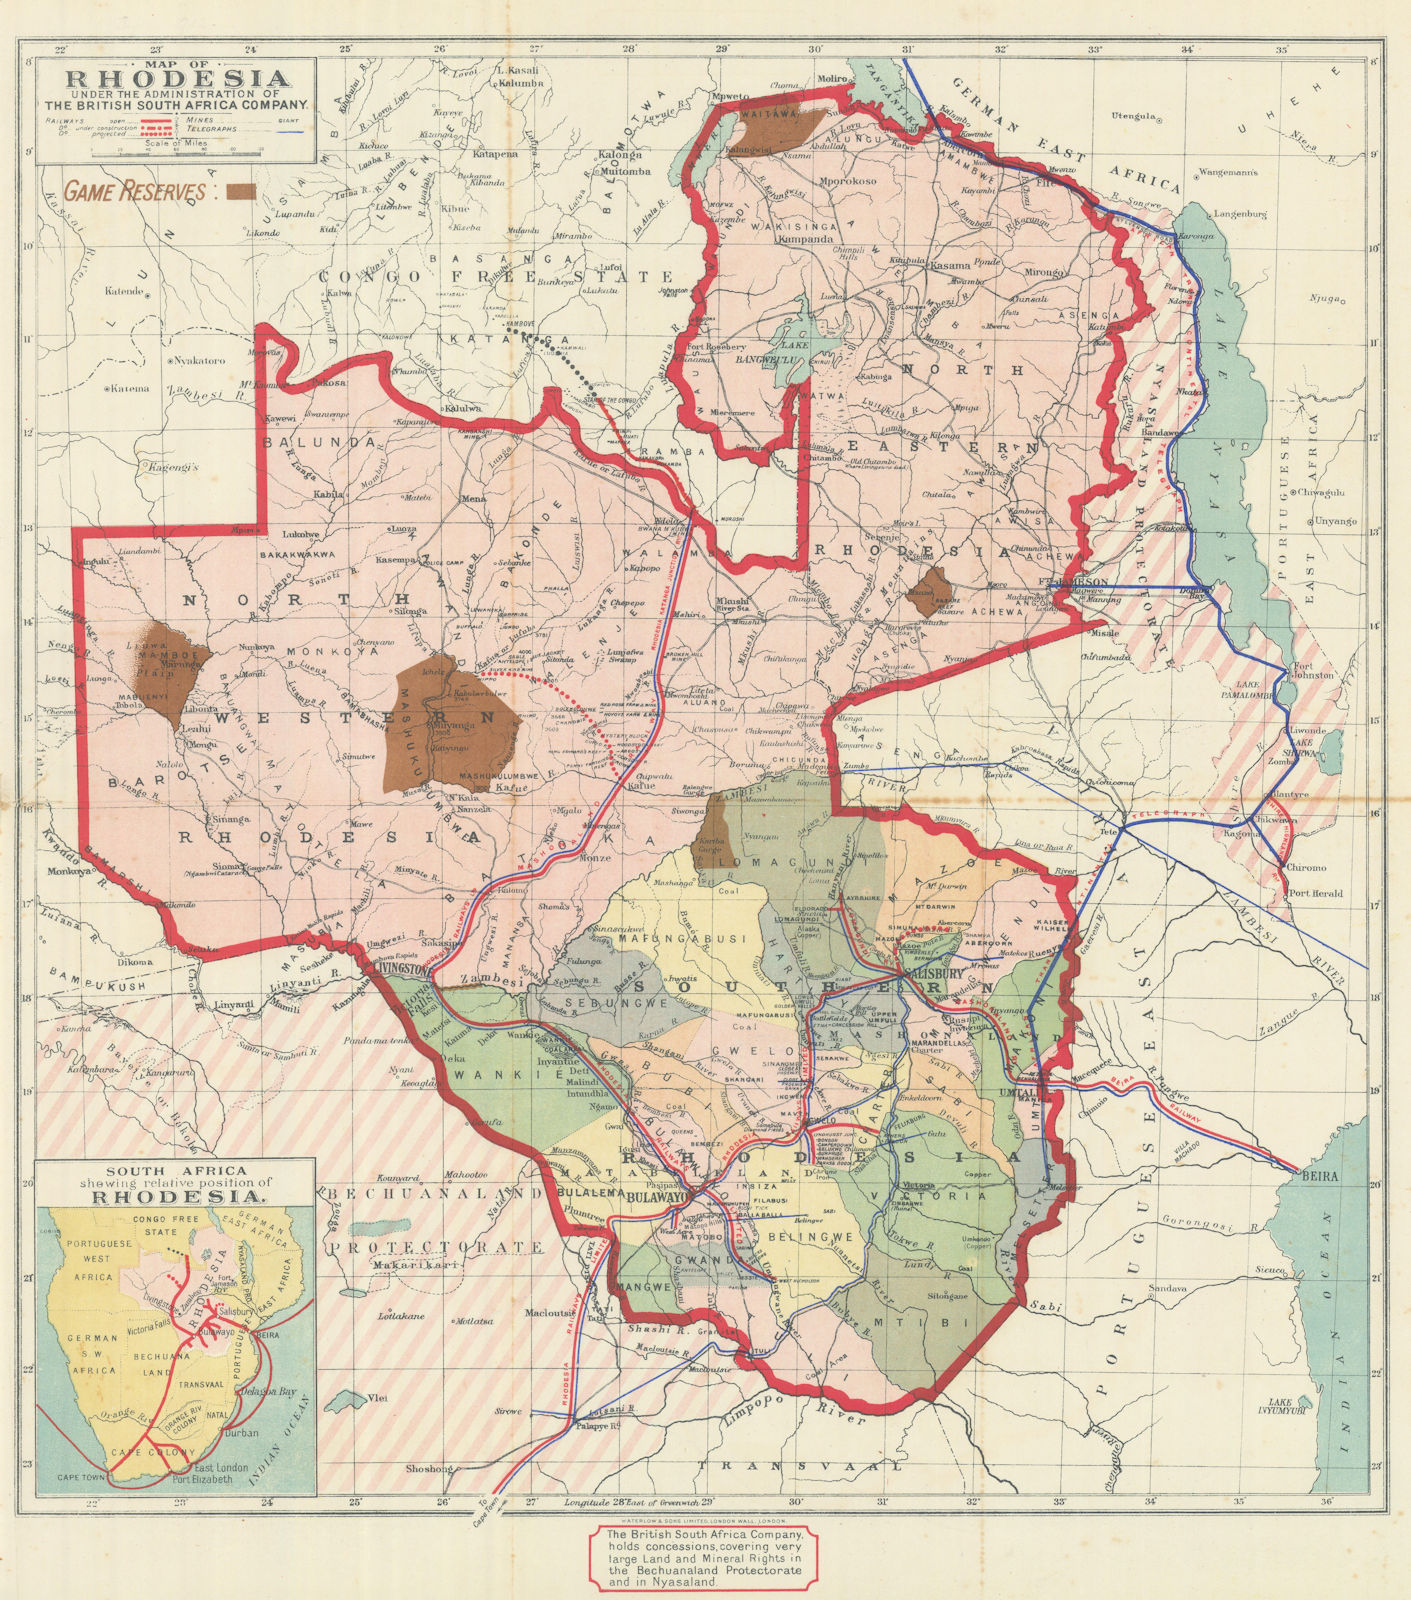 Rhodesia… British South Africa Company. Game reserves. Zimbabwe Zambia 1910 map